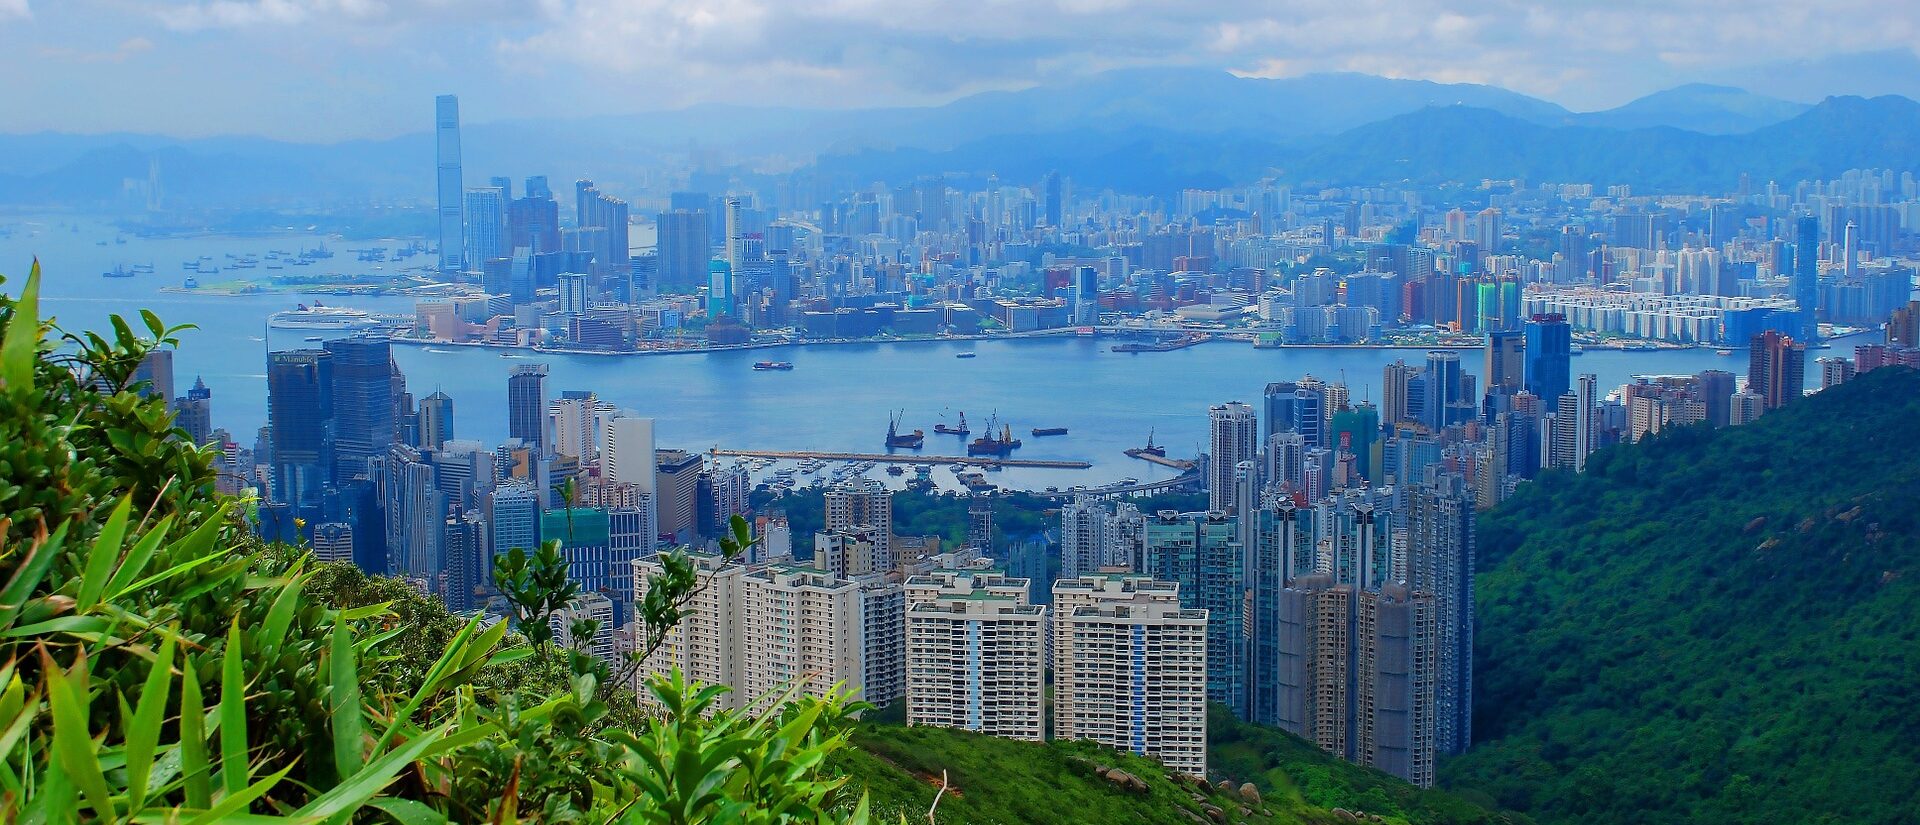 L'archevêque de Pékin se rendra à Hong Kong. Vue de la ville de Hong Kong | © Pixabay